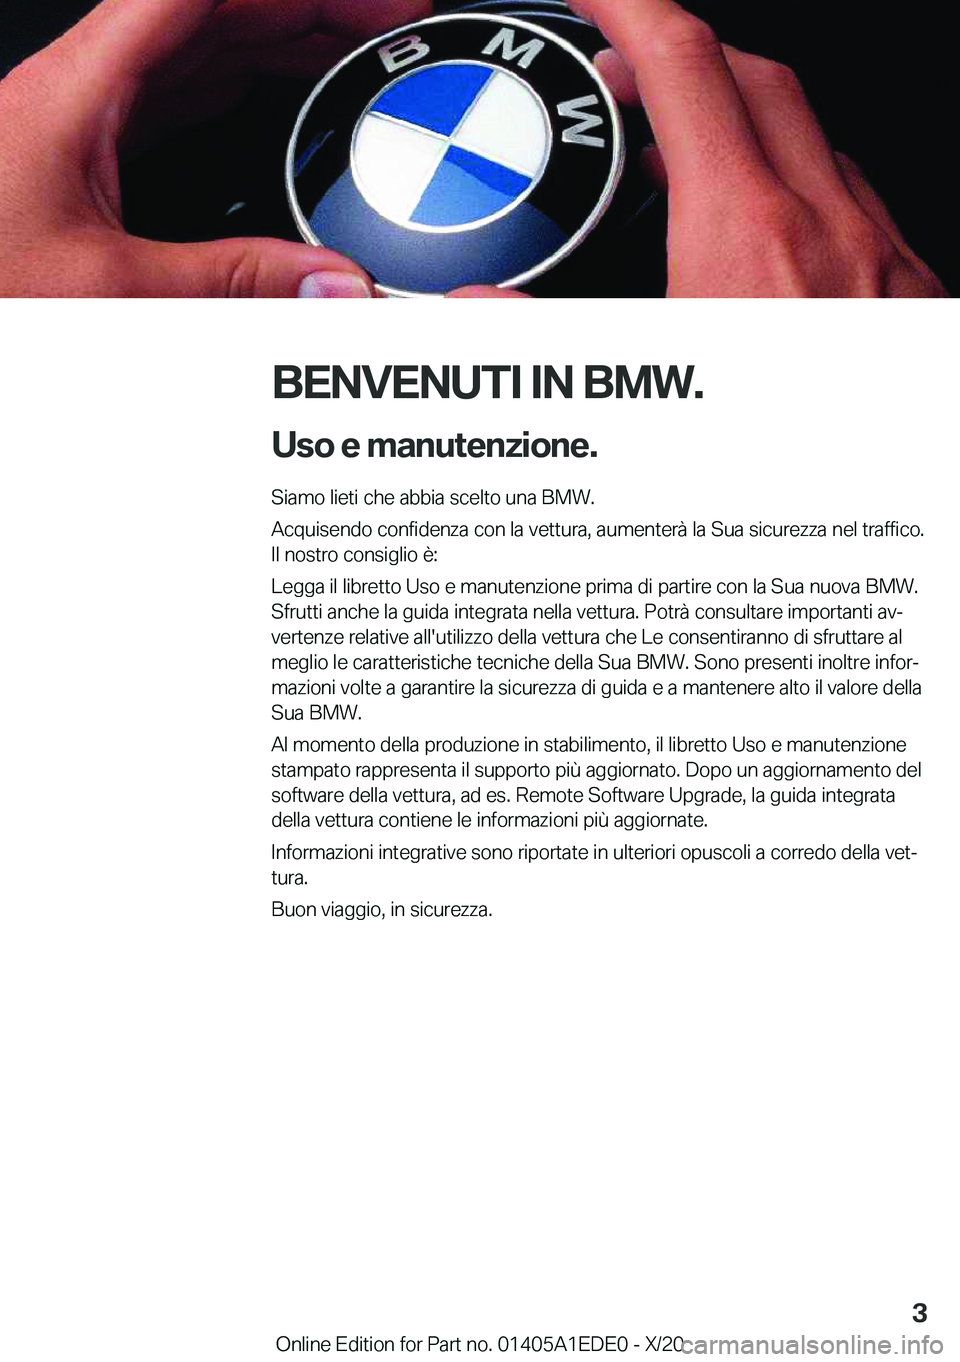 BMW 8 SERIES CONVERTIBLE 2021  Libretti Di Uso E manutenzione (in Italian) �B�E�N�V�E�N�U�T�I��I�N��B�M�W�.�U�s�o��e��m�a�n�u�t�e�n�z�i�o�n�e�.
�S�i�a�m�o��l�i�e�t�i��c�h�e��a�b�b�i�a��s�c�e�l�t�o��u�n�a��B�M�W�.
�A�c�q�u�i�s�e�n�d�o��c�o�n�f�i�d�e�n�z�a��c�o�n�